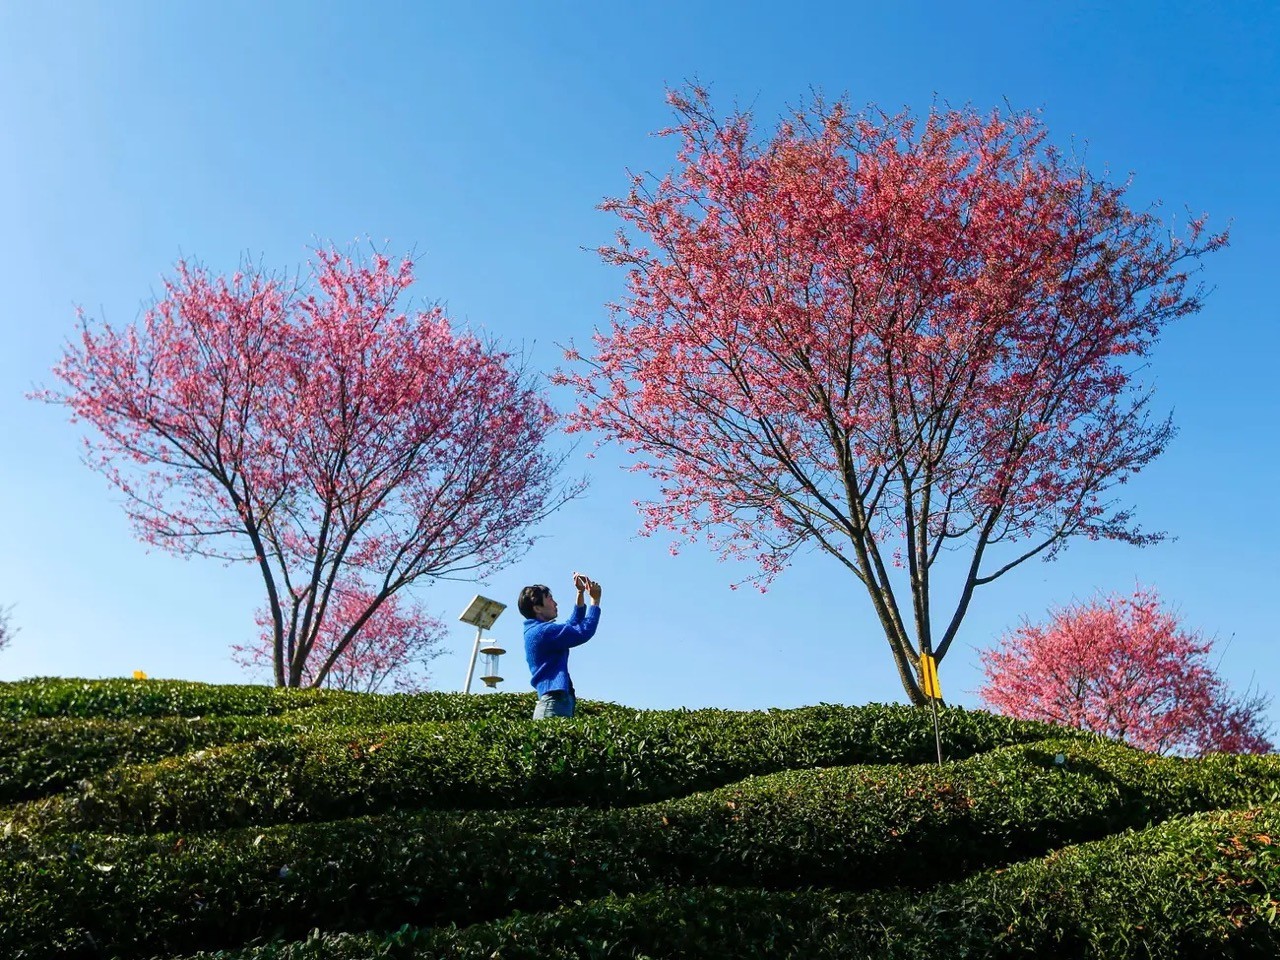 [Photo] Cherry Blossom Peak Bloom Arrives worldwide